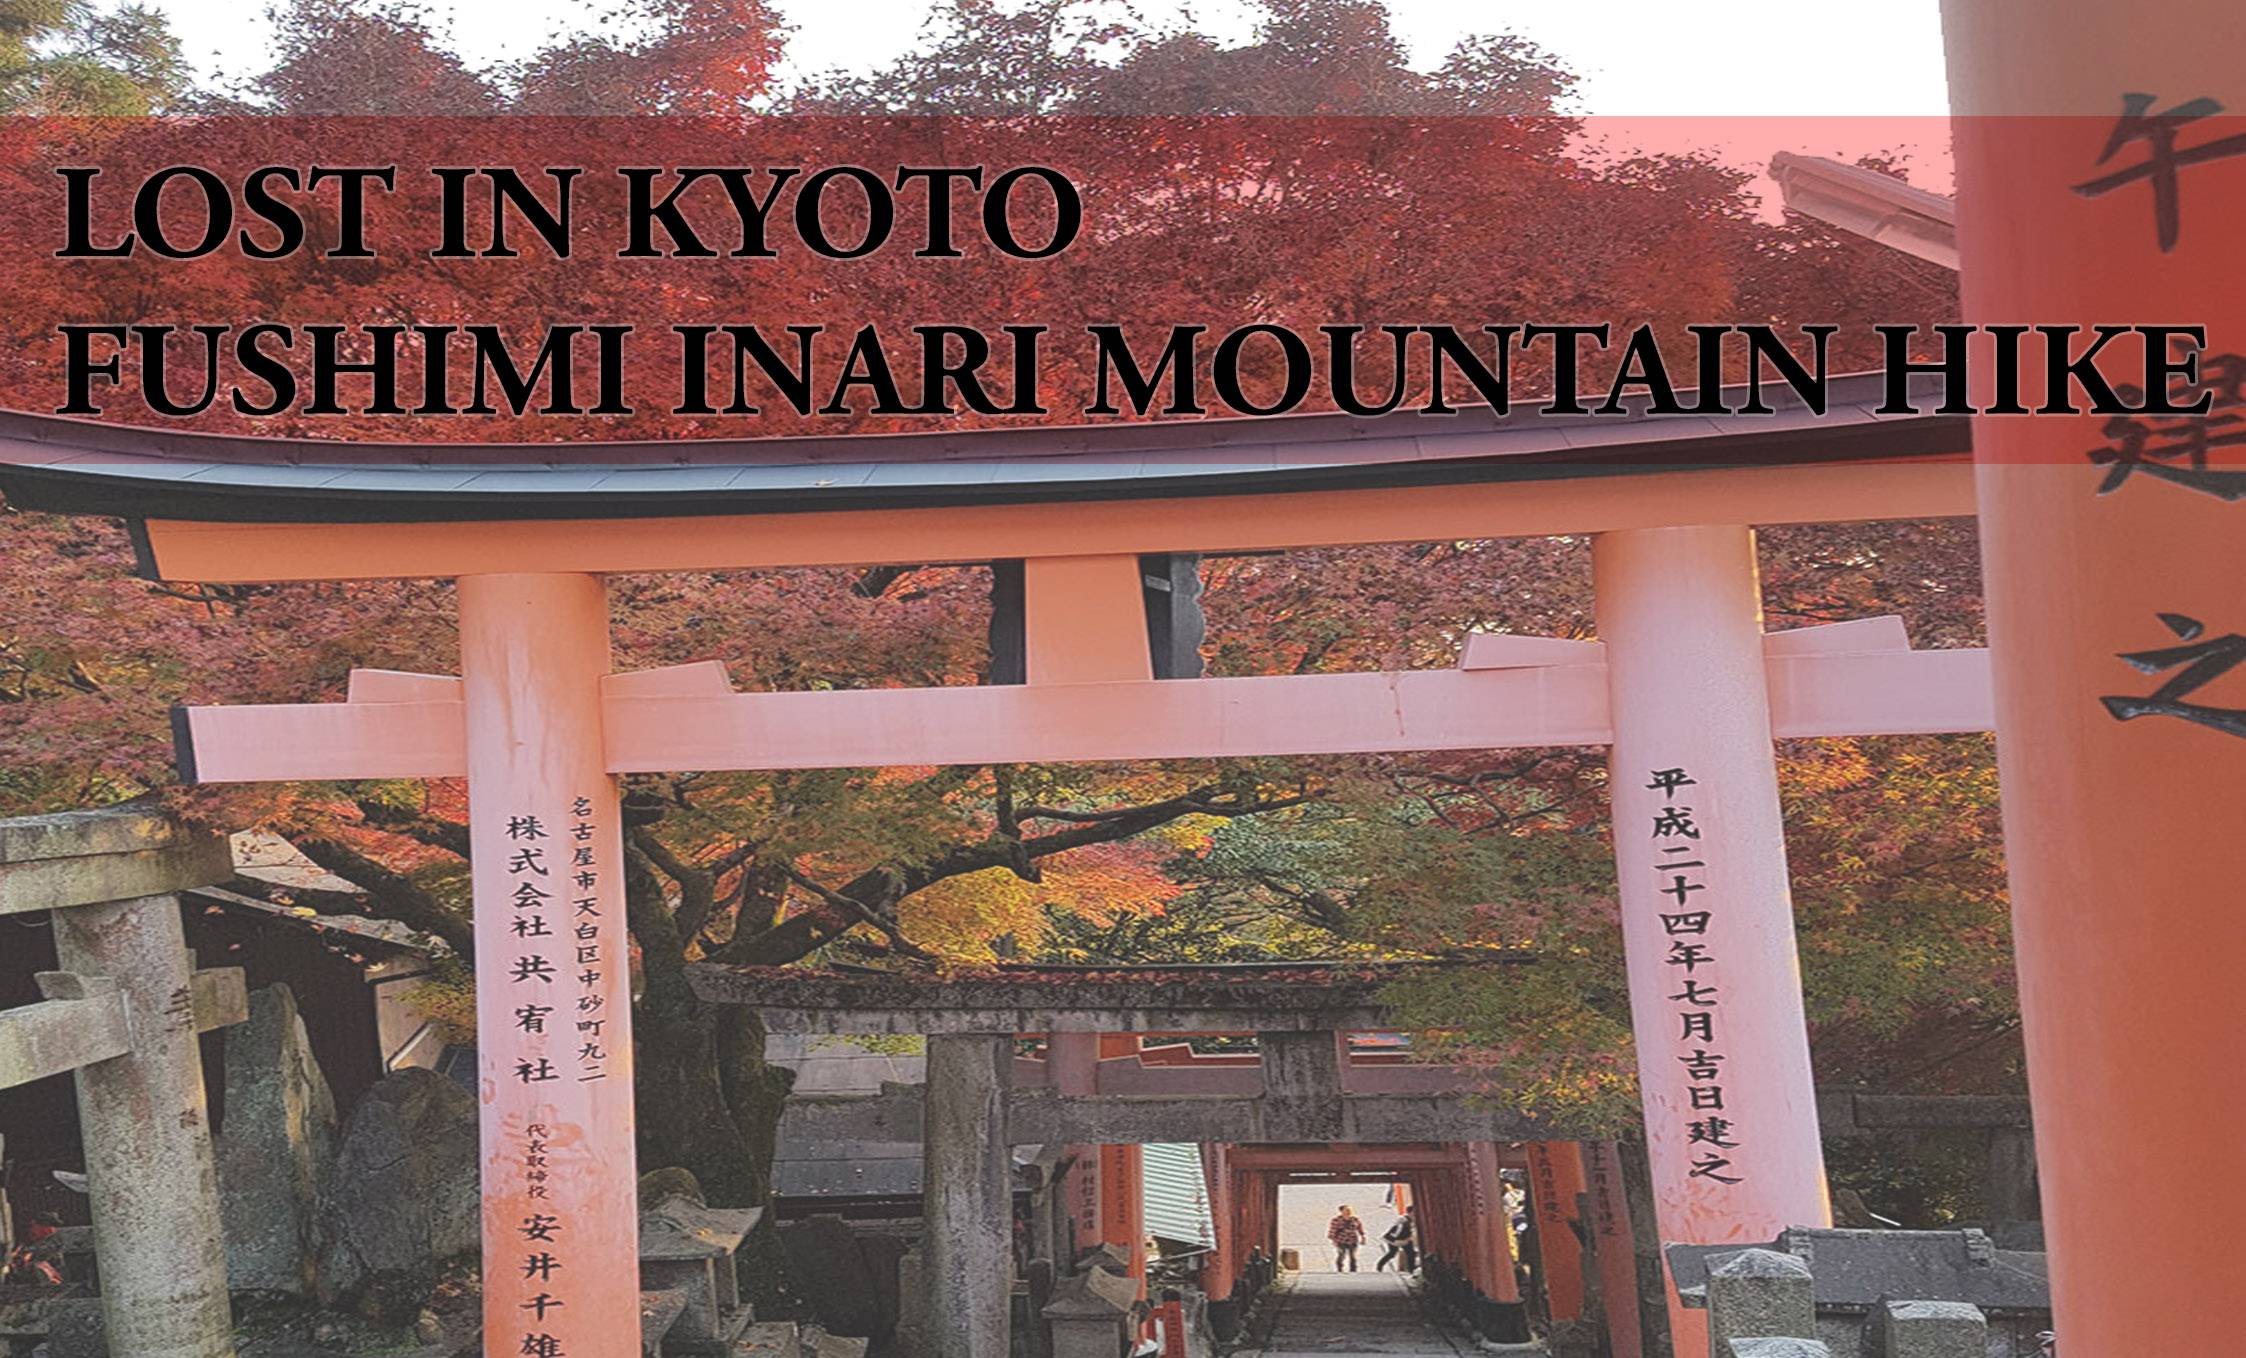 LOST IN KYOTO: FUSHIMI INARI MOUNTAIN HIKE